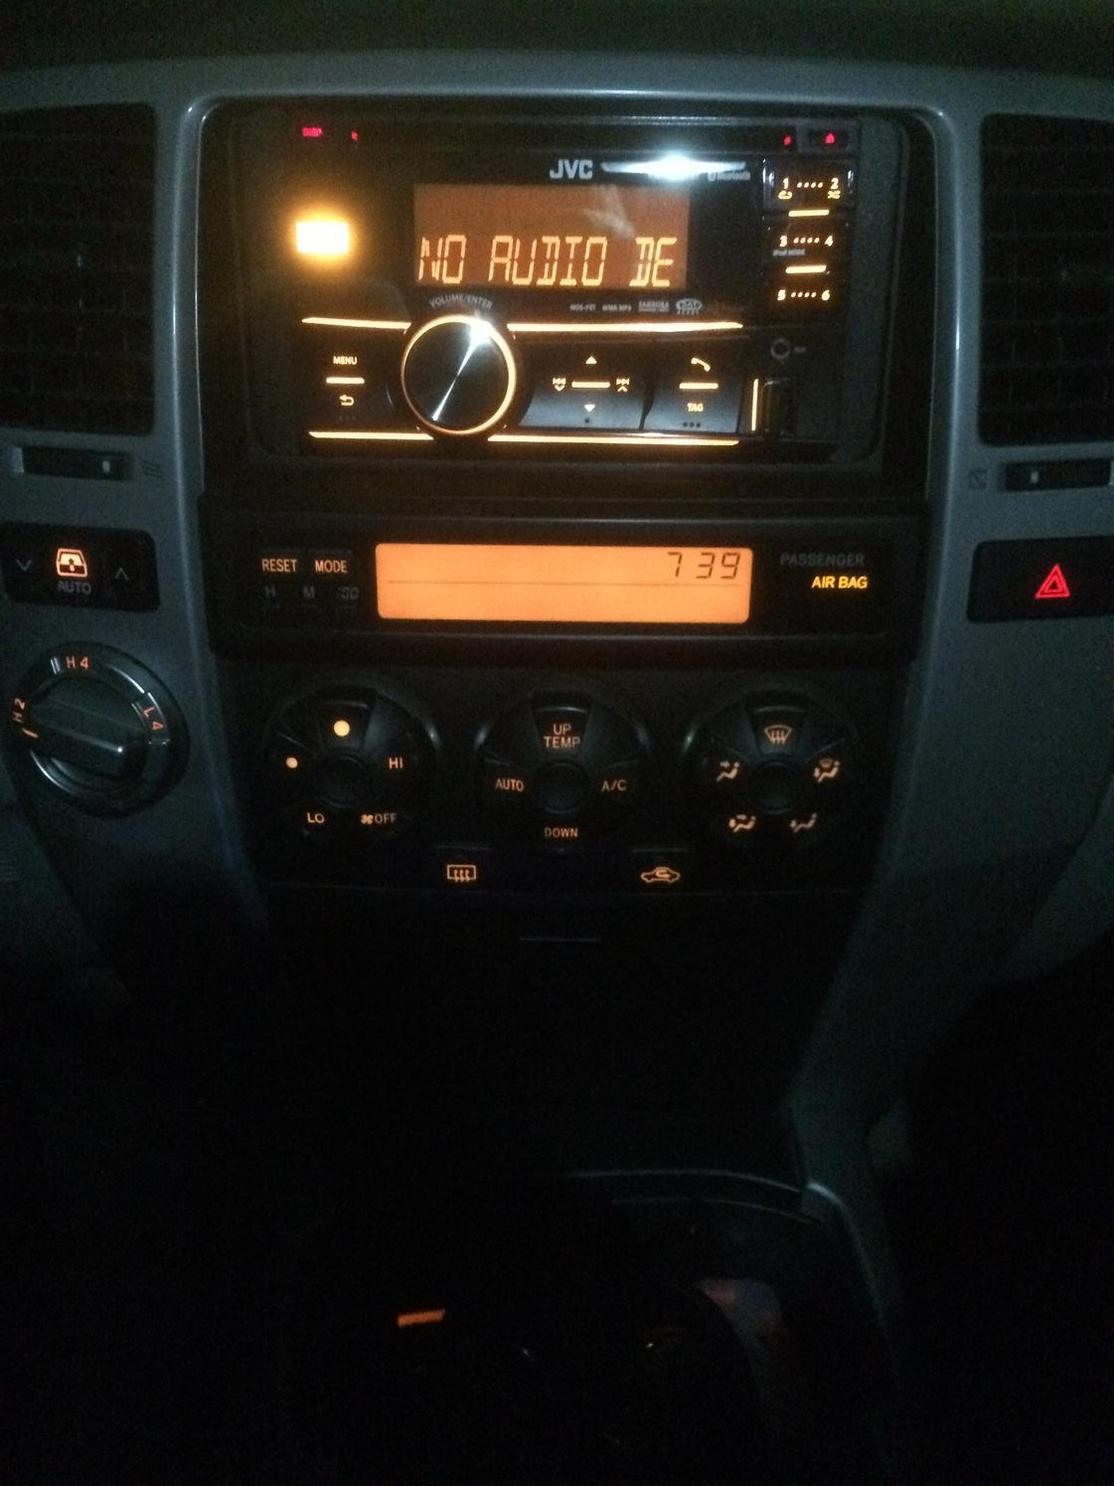 Radio Upgrades... Let see them.-jvc-jpg